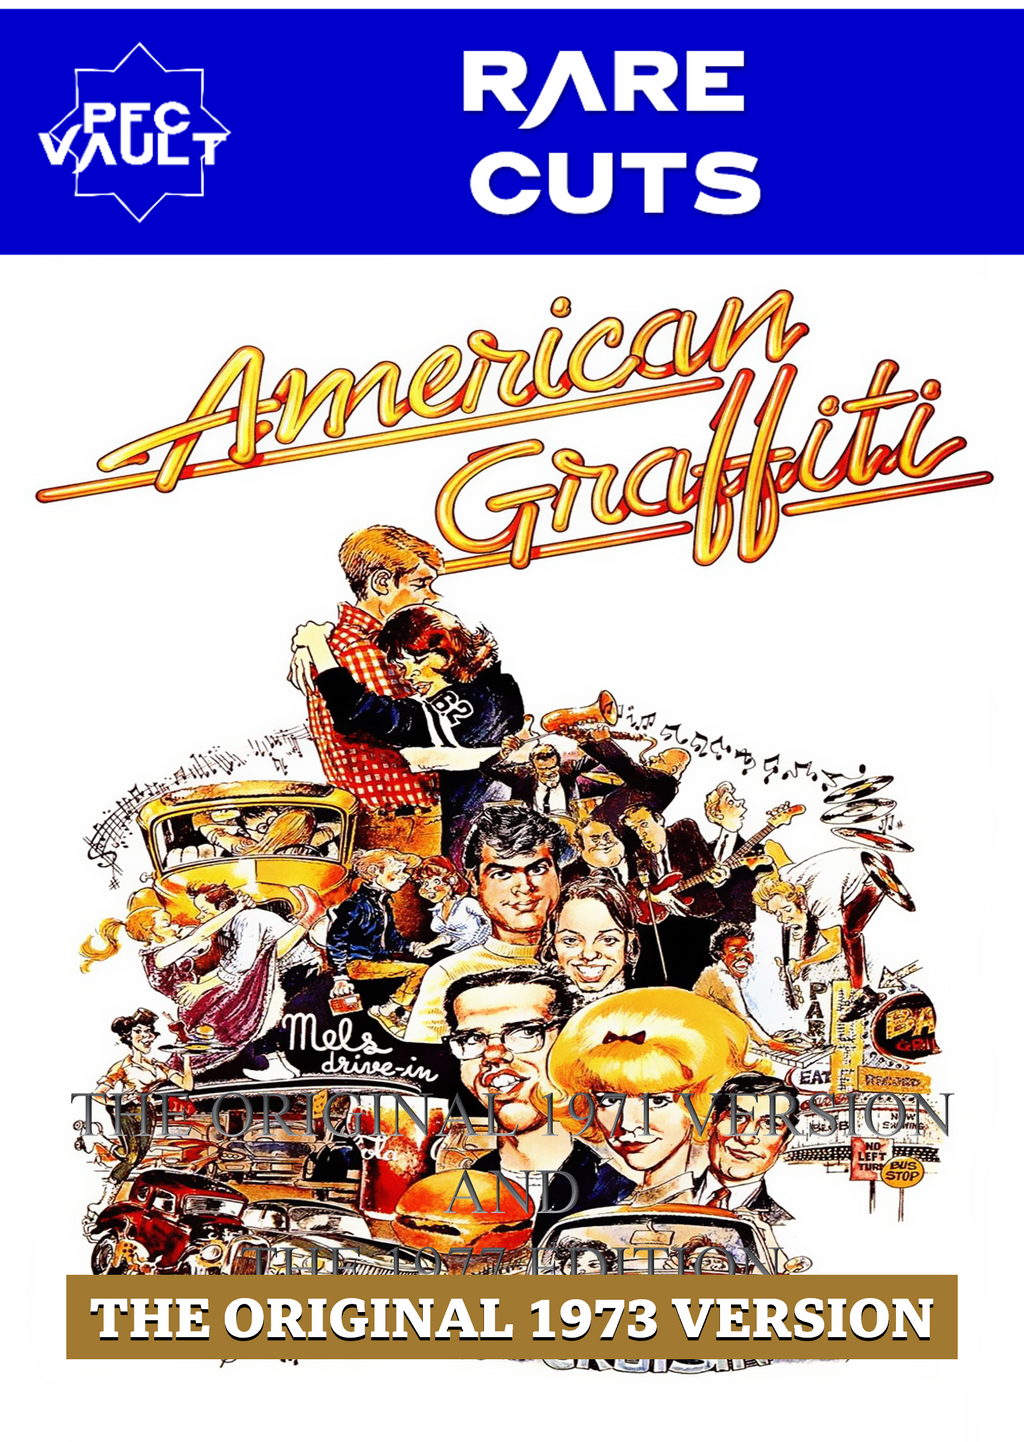 American Graffiti (1973) - IMDb